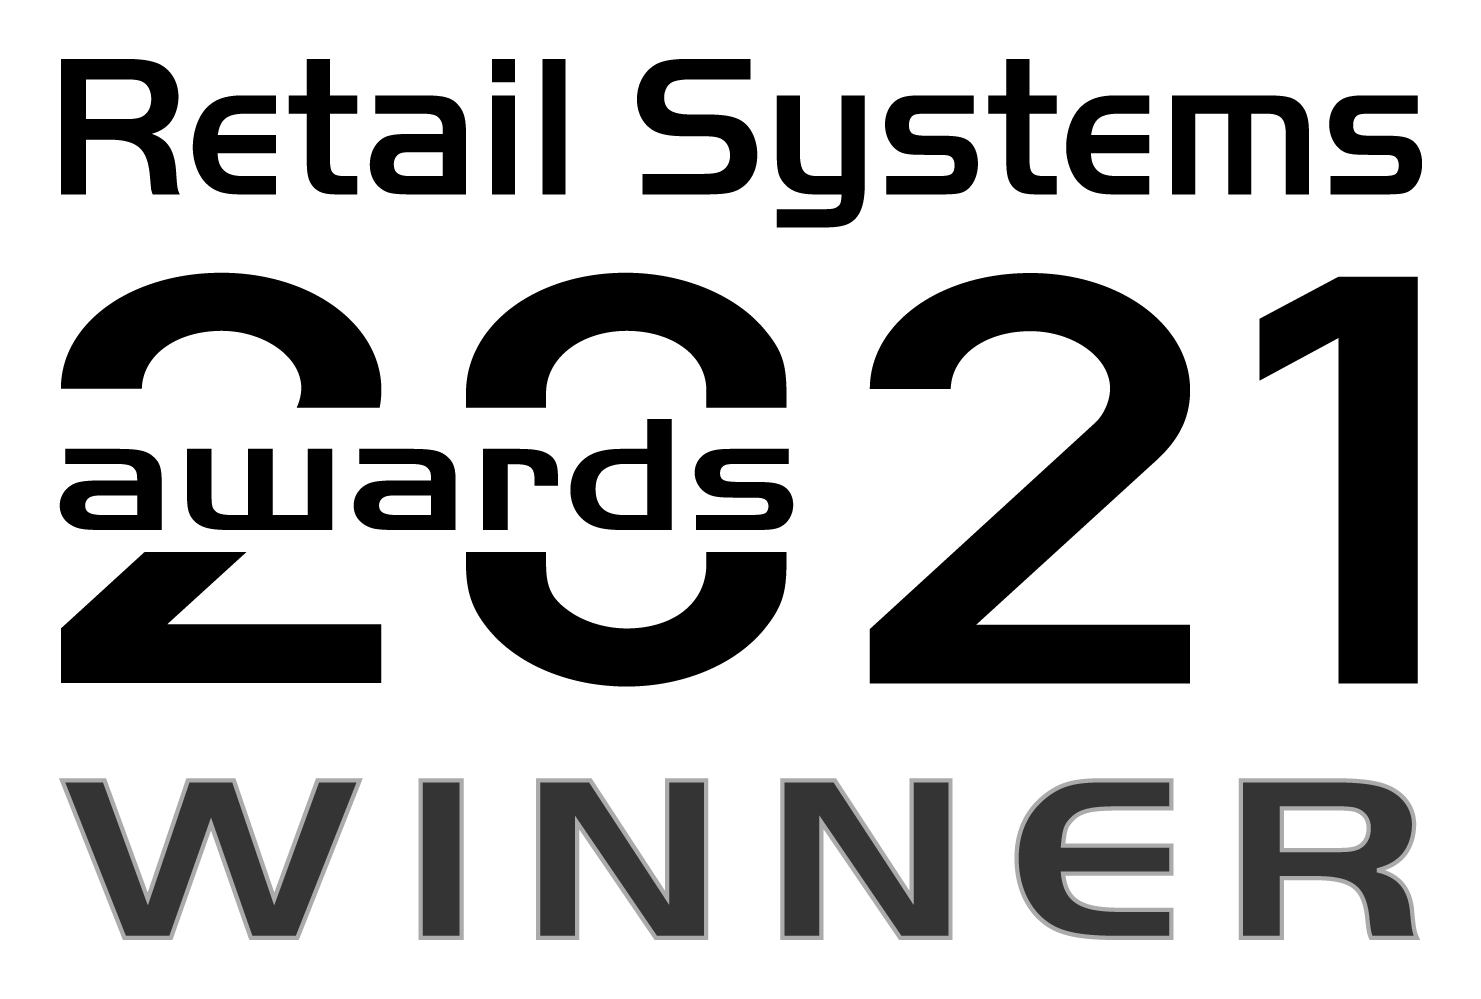 Retail Systems Awards 2021 WINNER logo